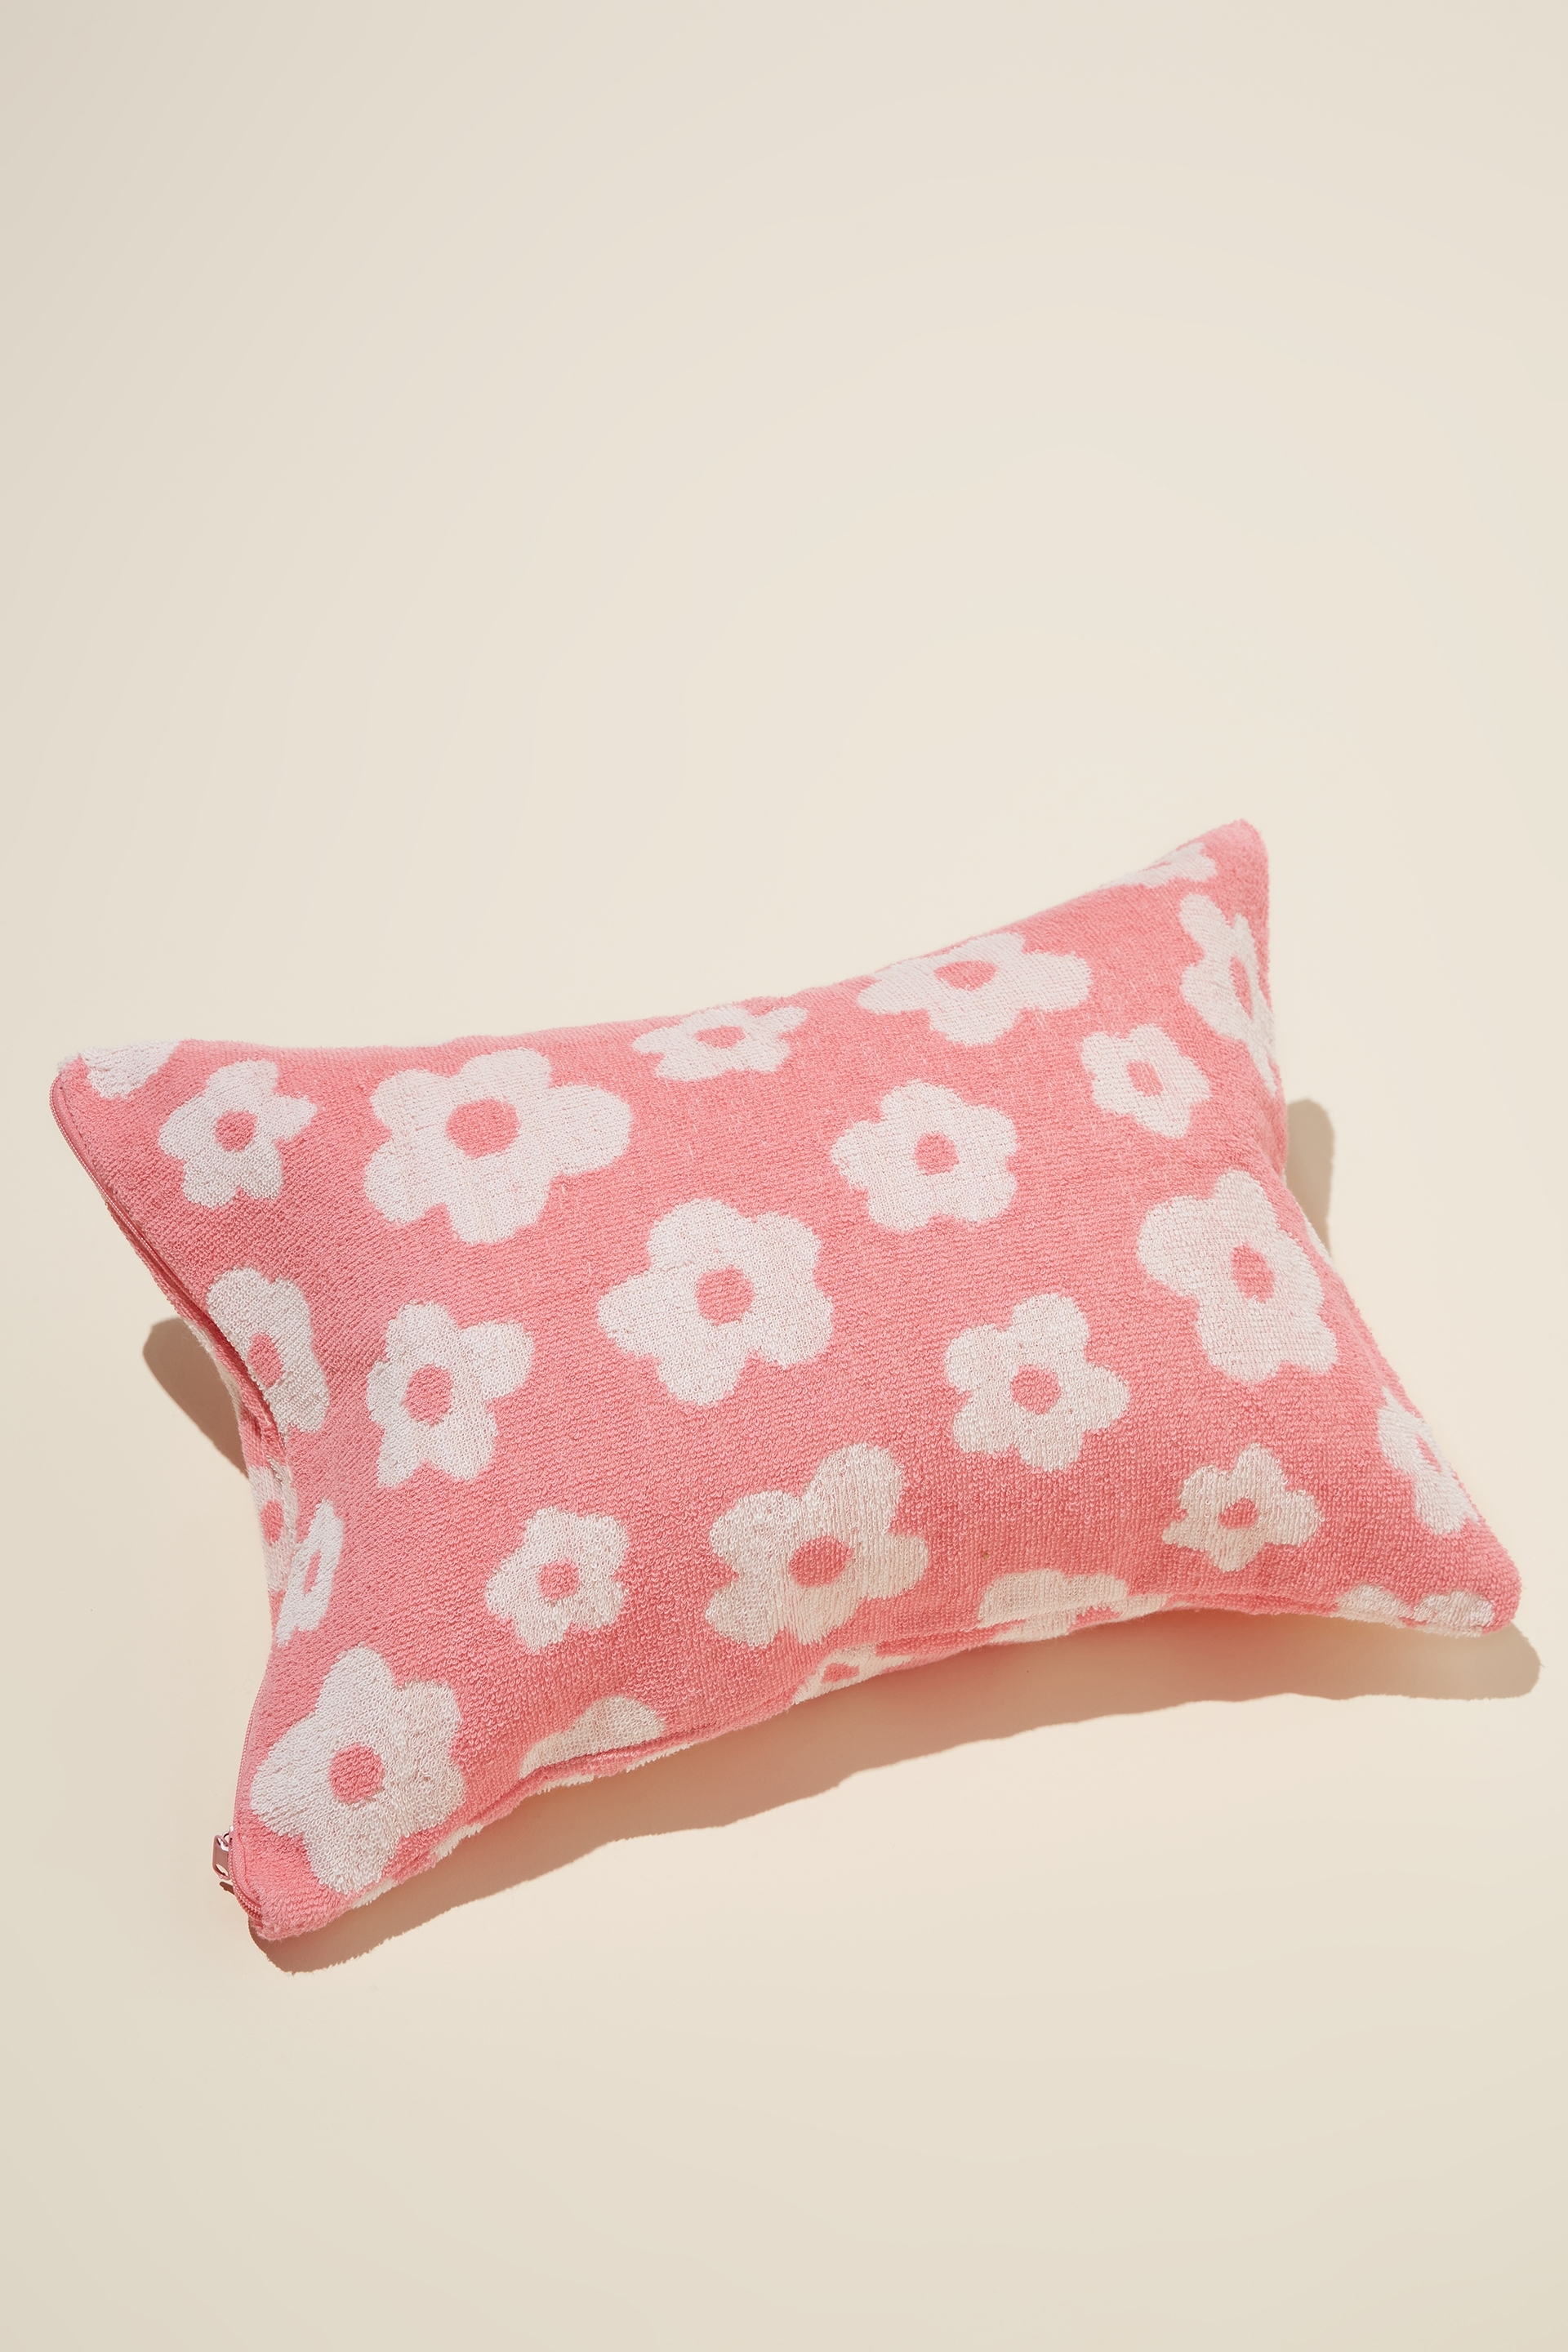 Rubi - Cotton Beach Pillow - Pink glow frankie daisy